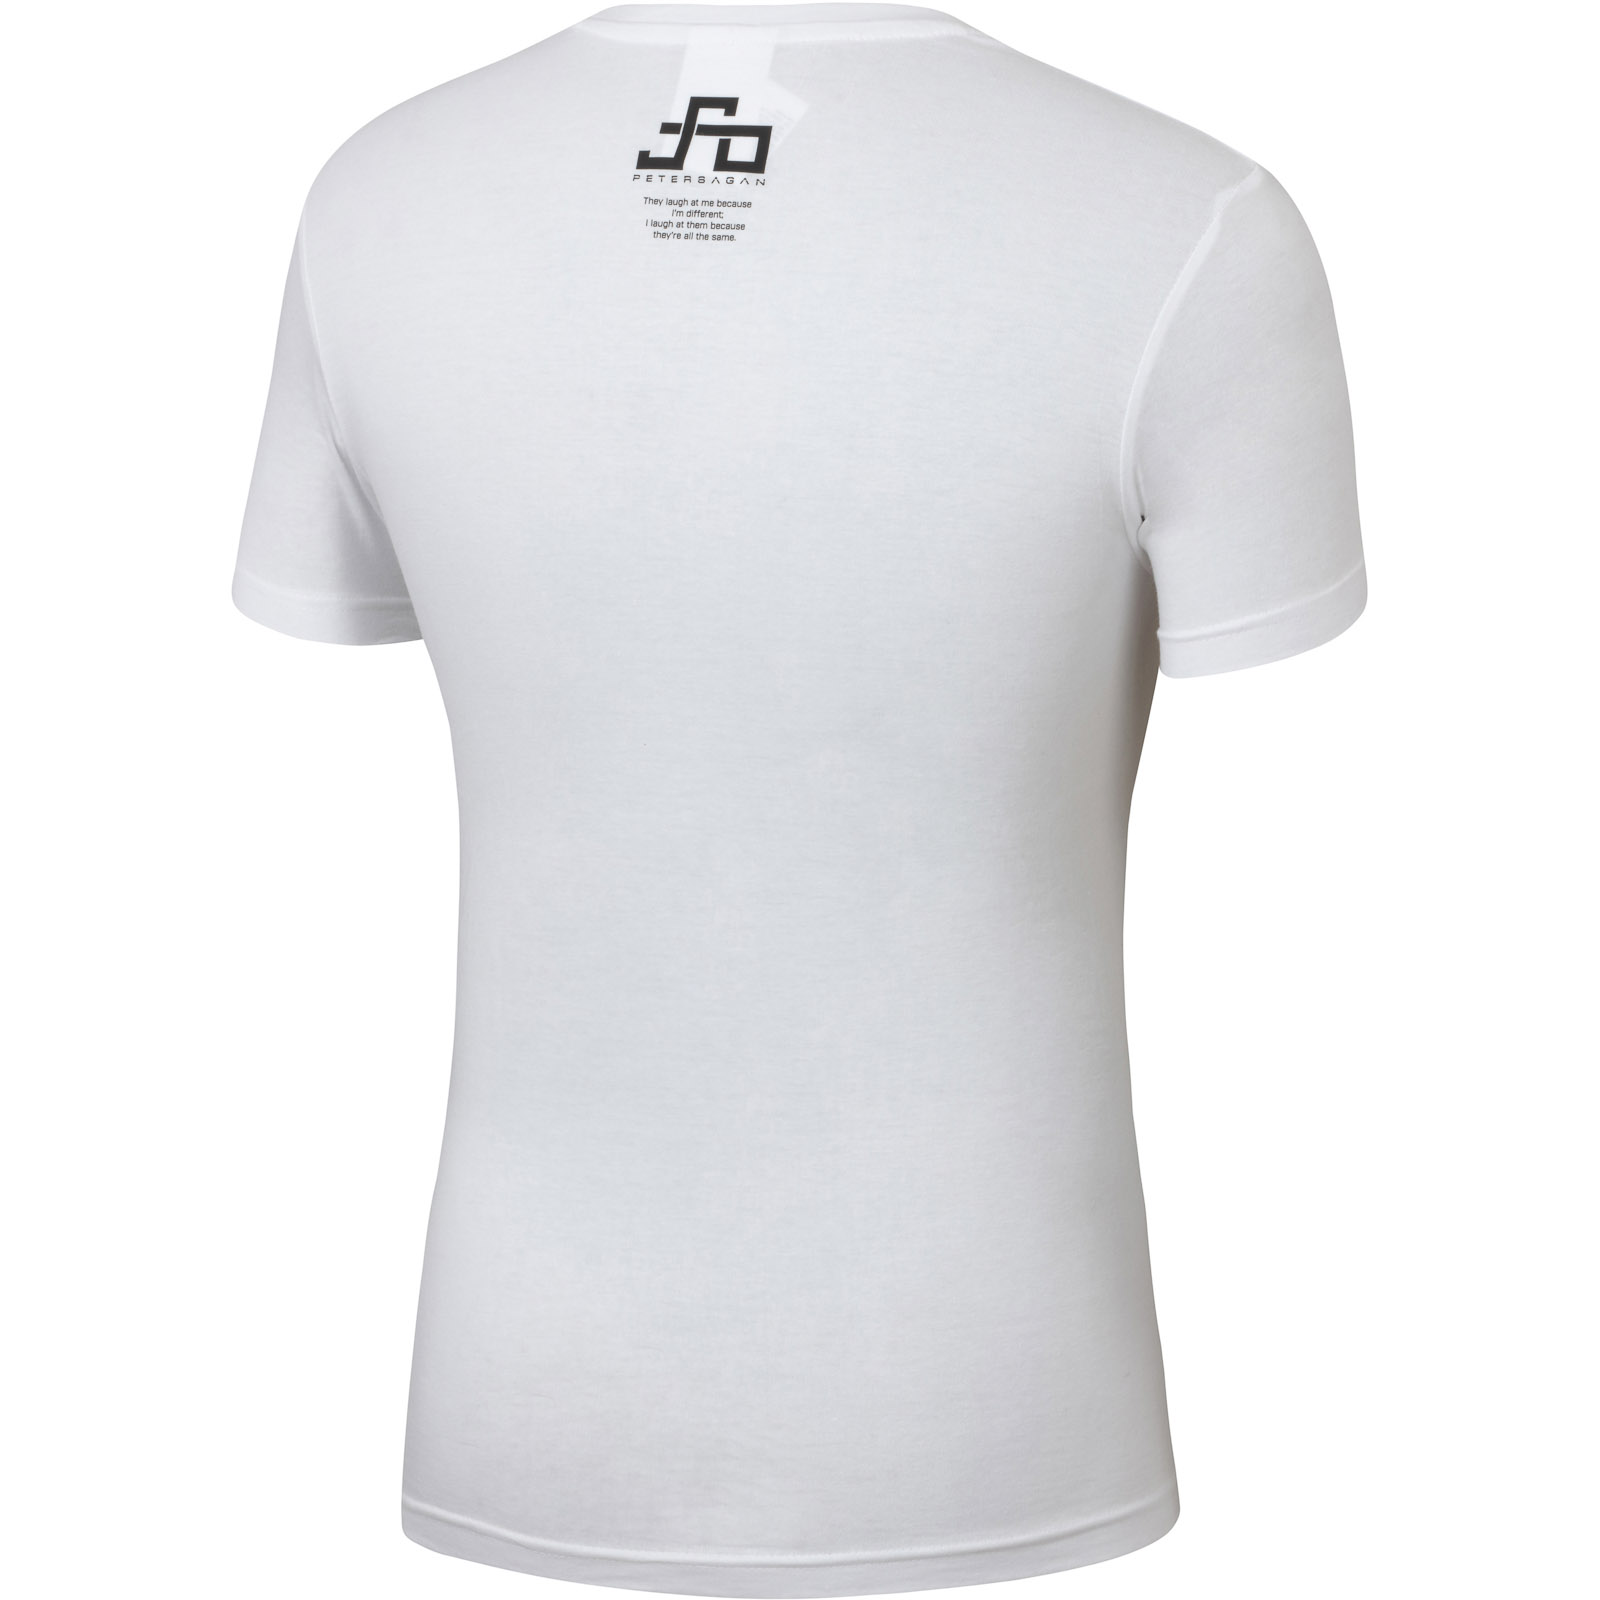 Sportful PETER SAGAN HOP tričko biele/čierne